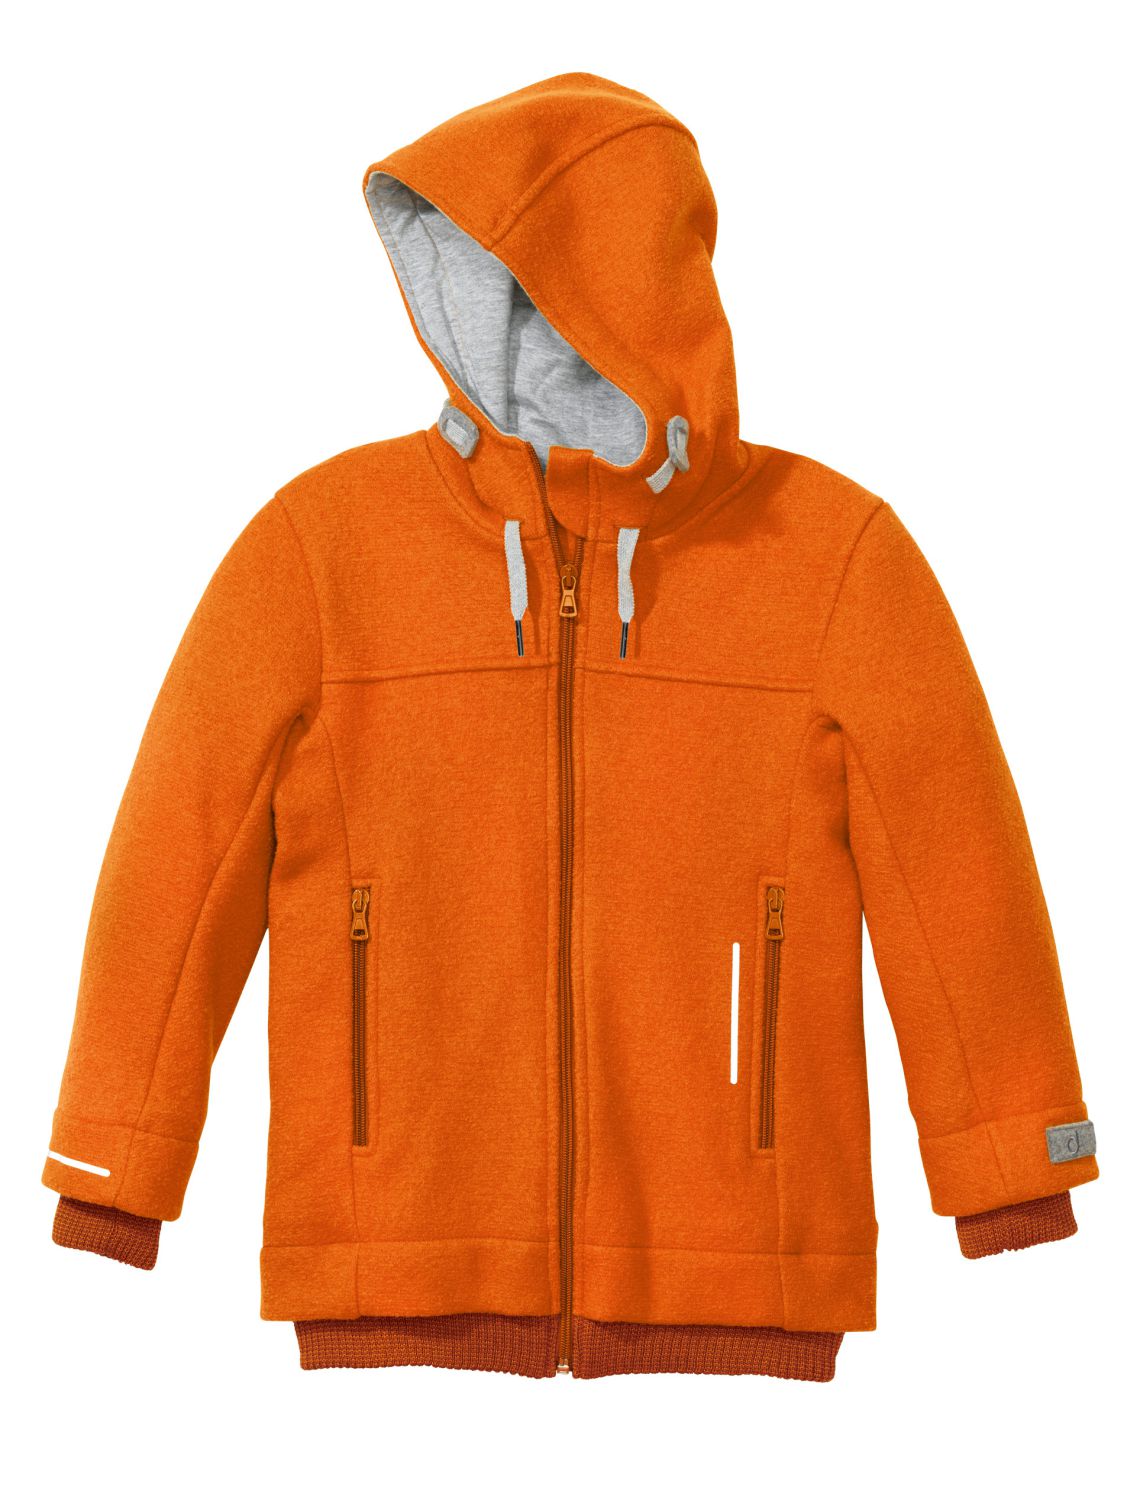 Disana Outdoor Jacket (Size: 158/164 / Color: Orange)